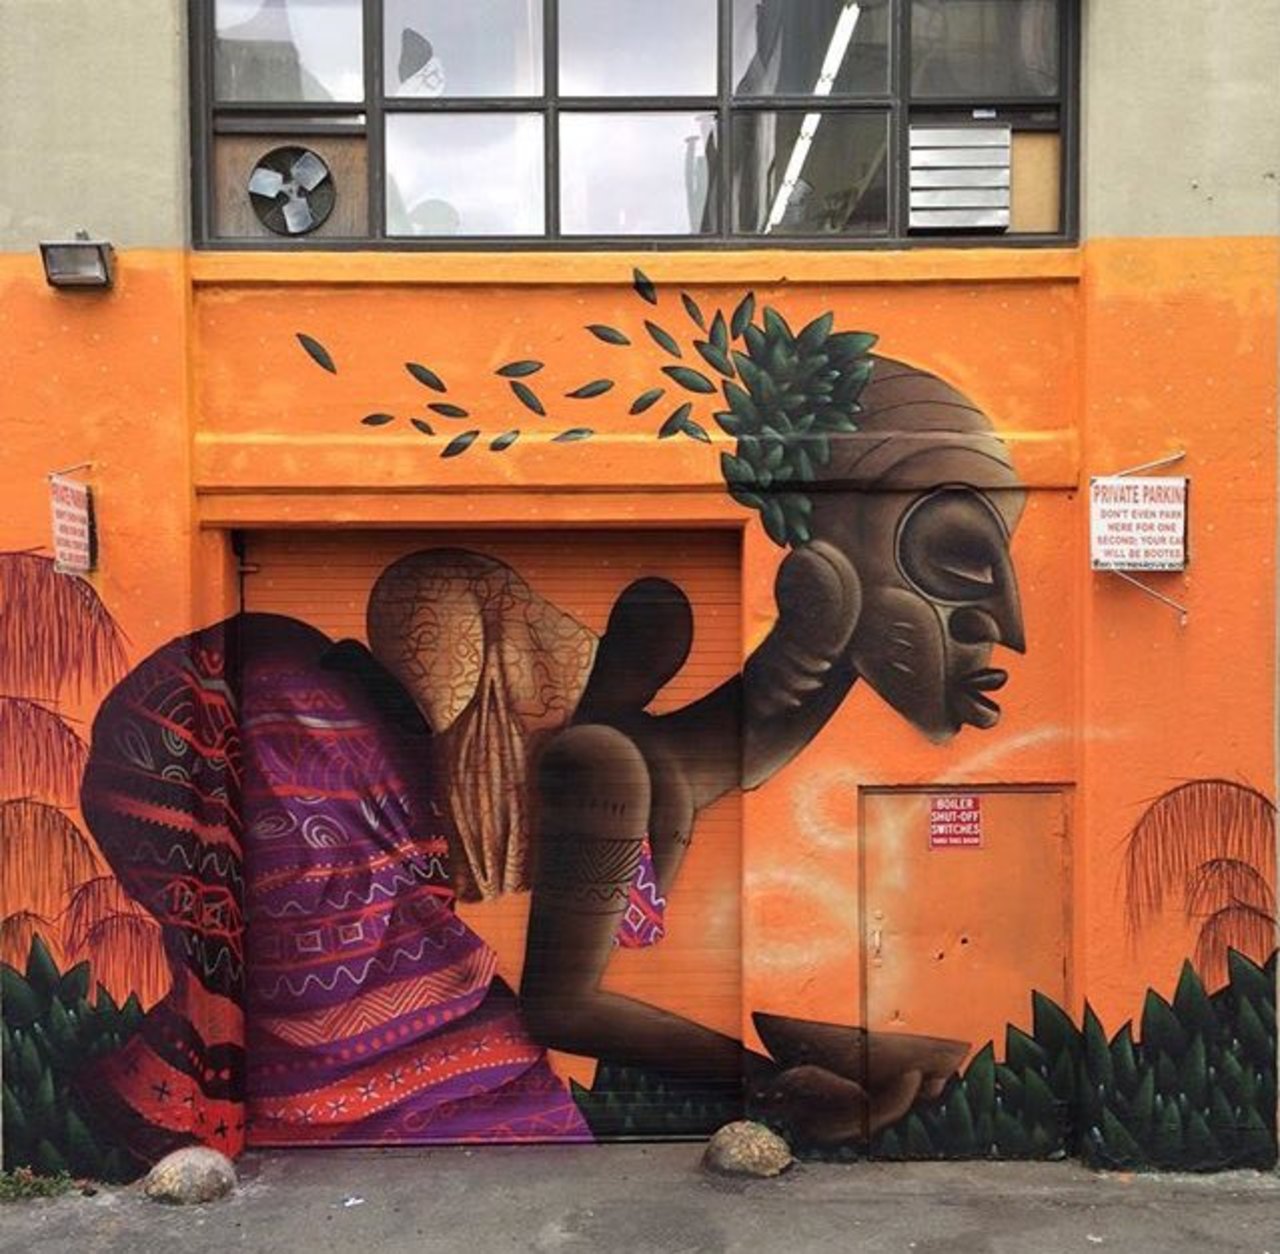 New Street Art by Alexandre Keto in NYC 

#art #graffiti #mural #streetart https://t.co/IG1O9rzBqt